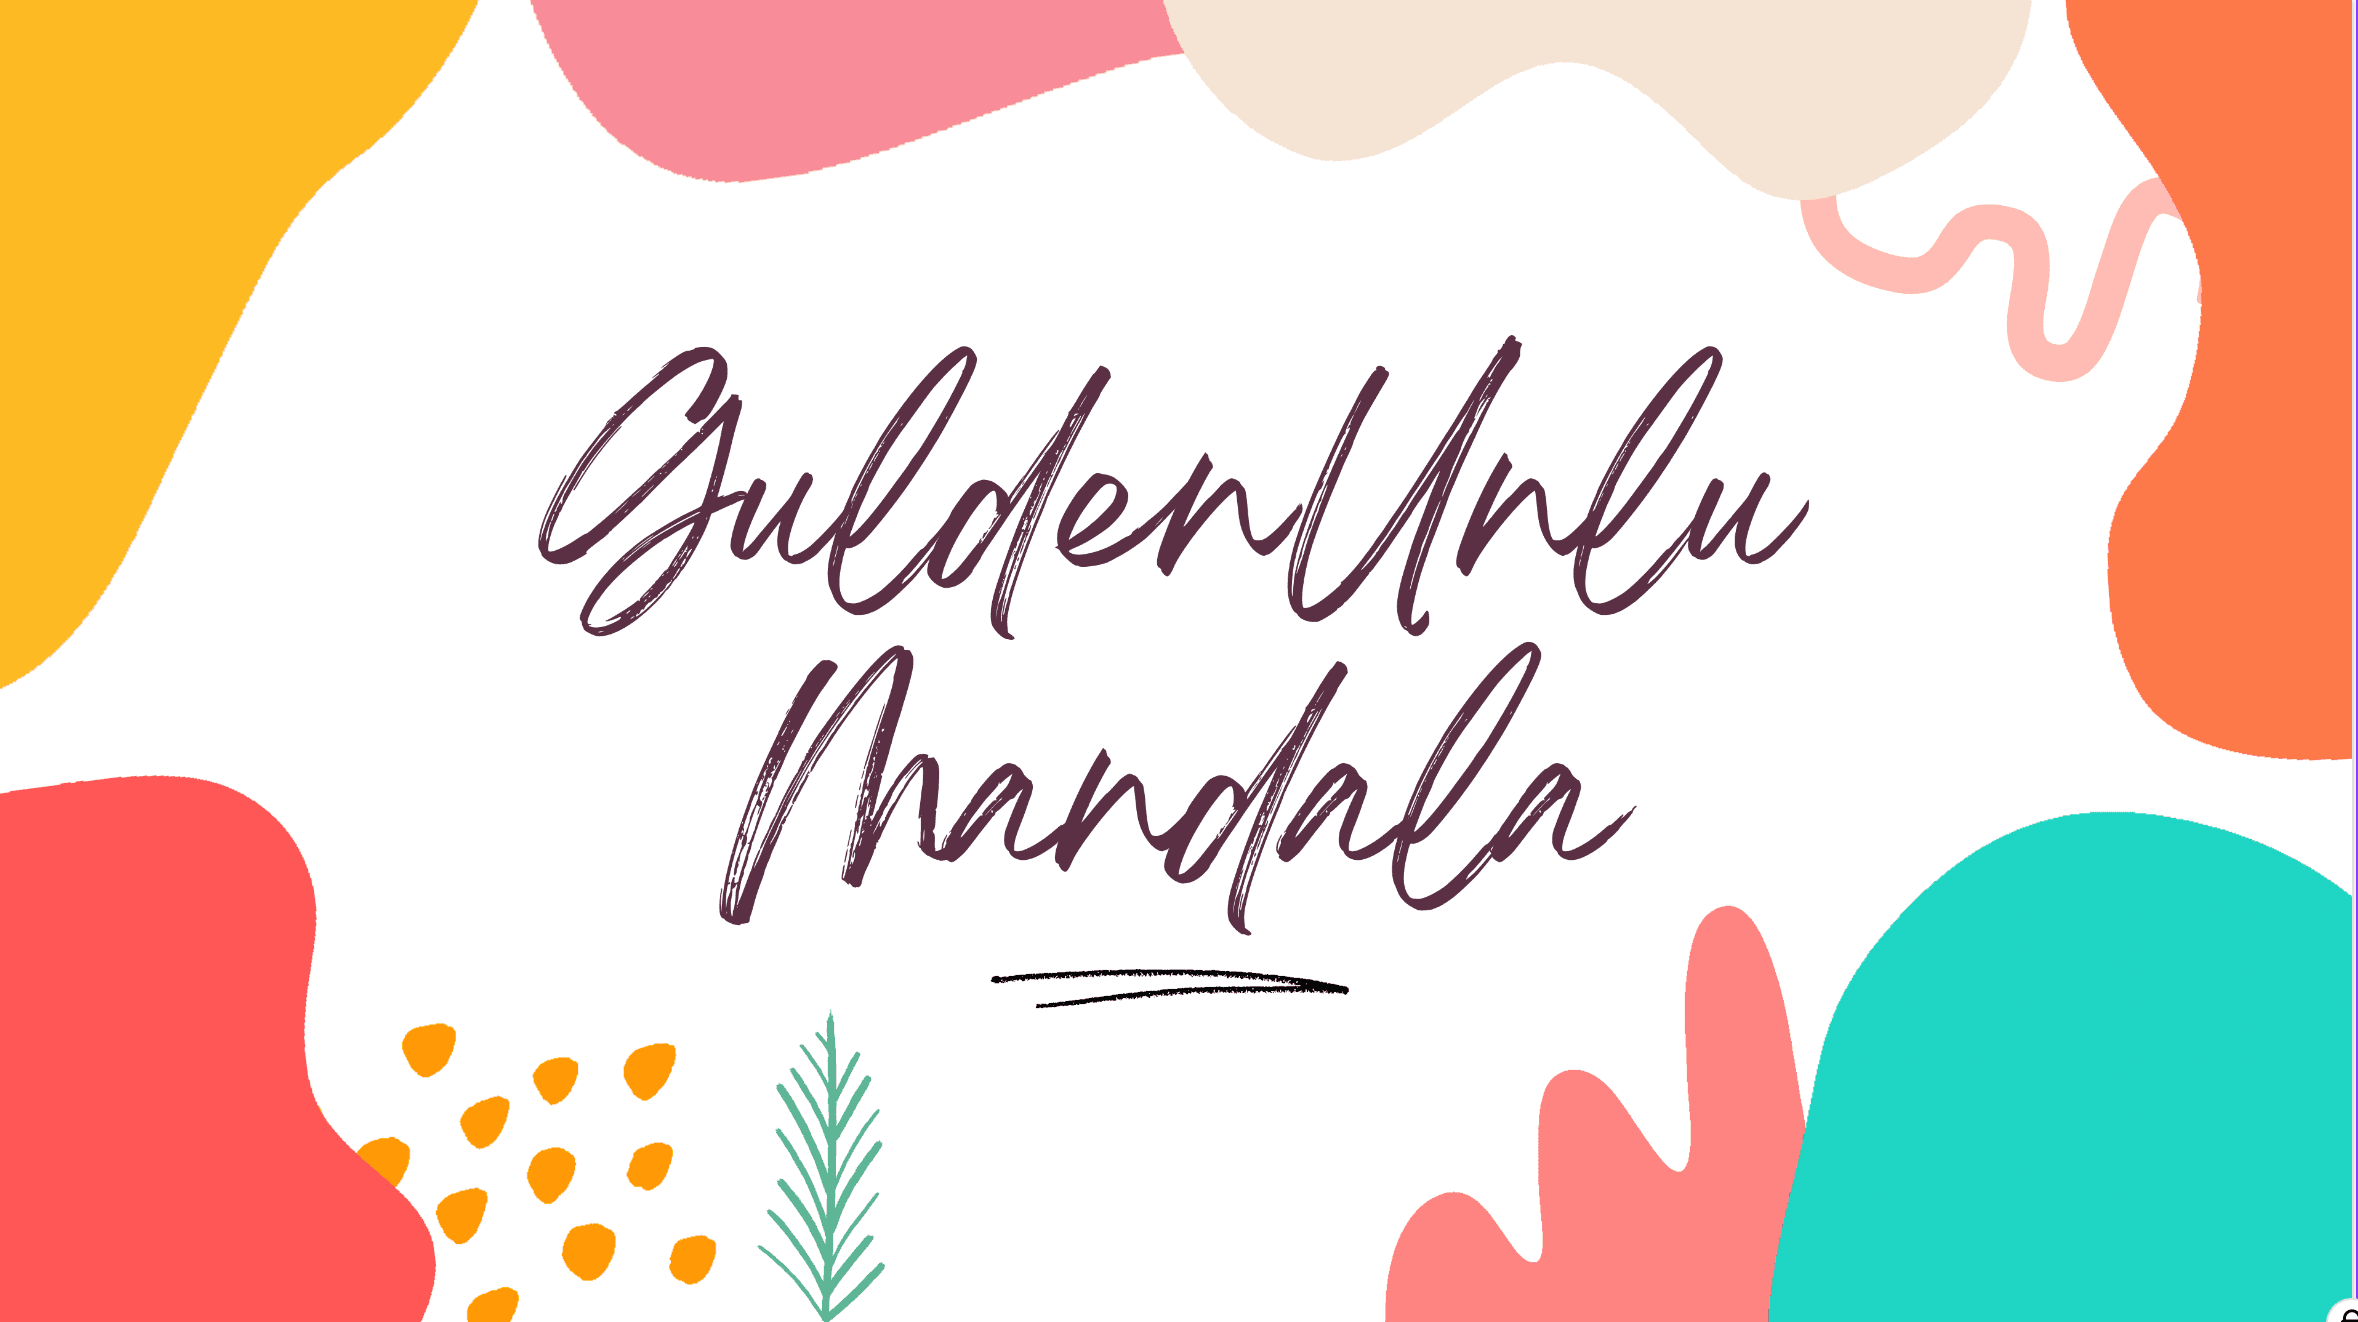 GuldenUnlu-Mandala banner